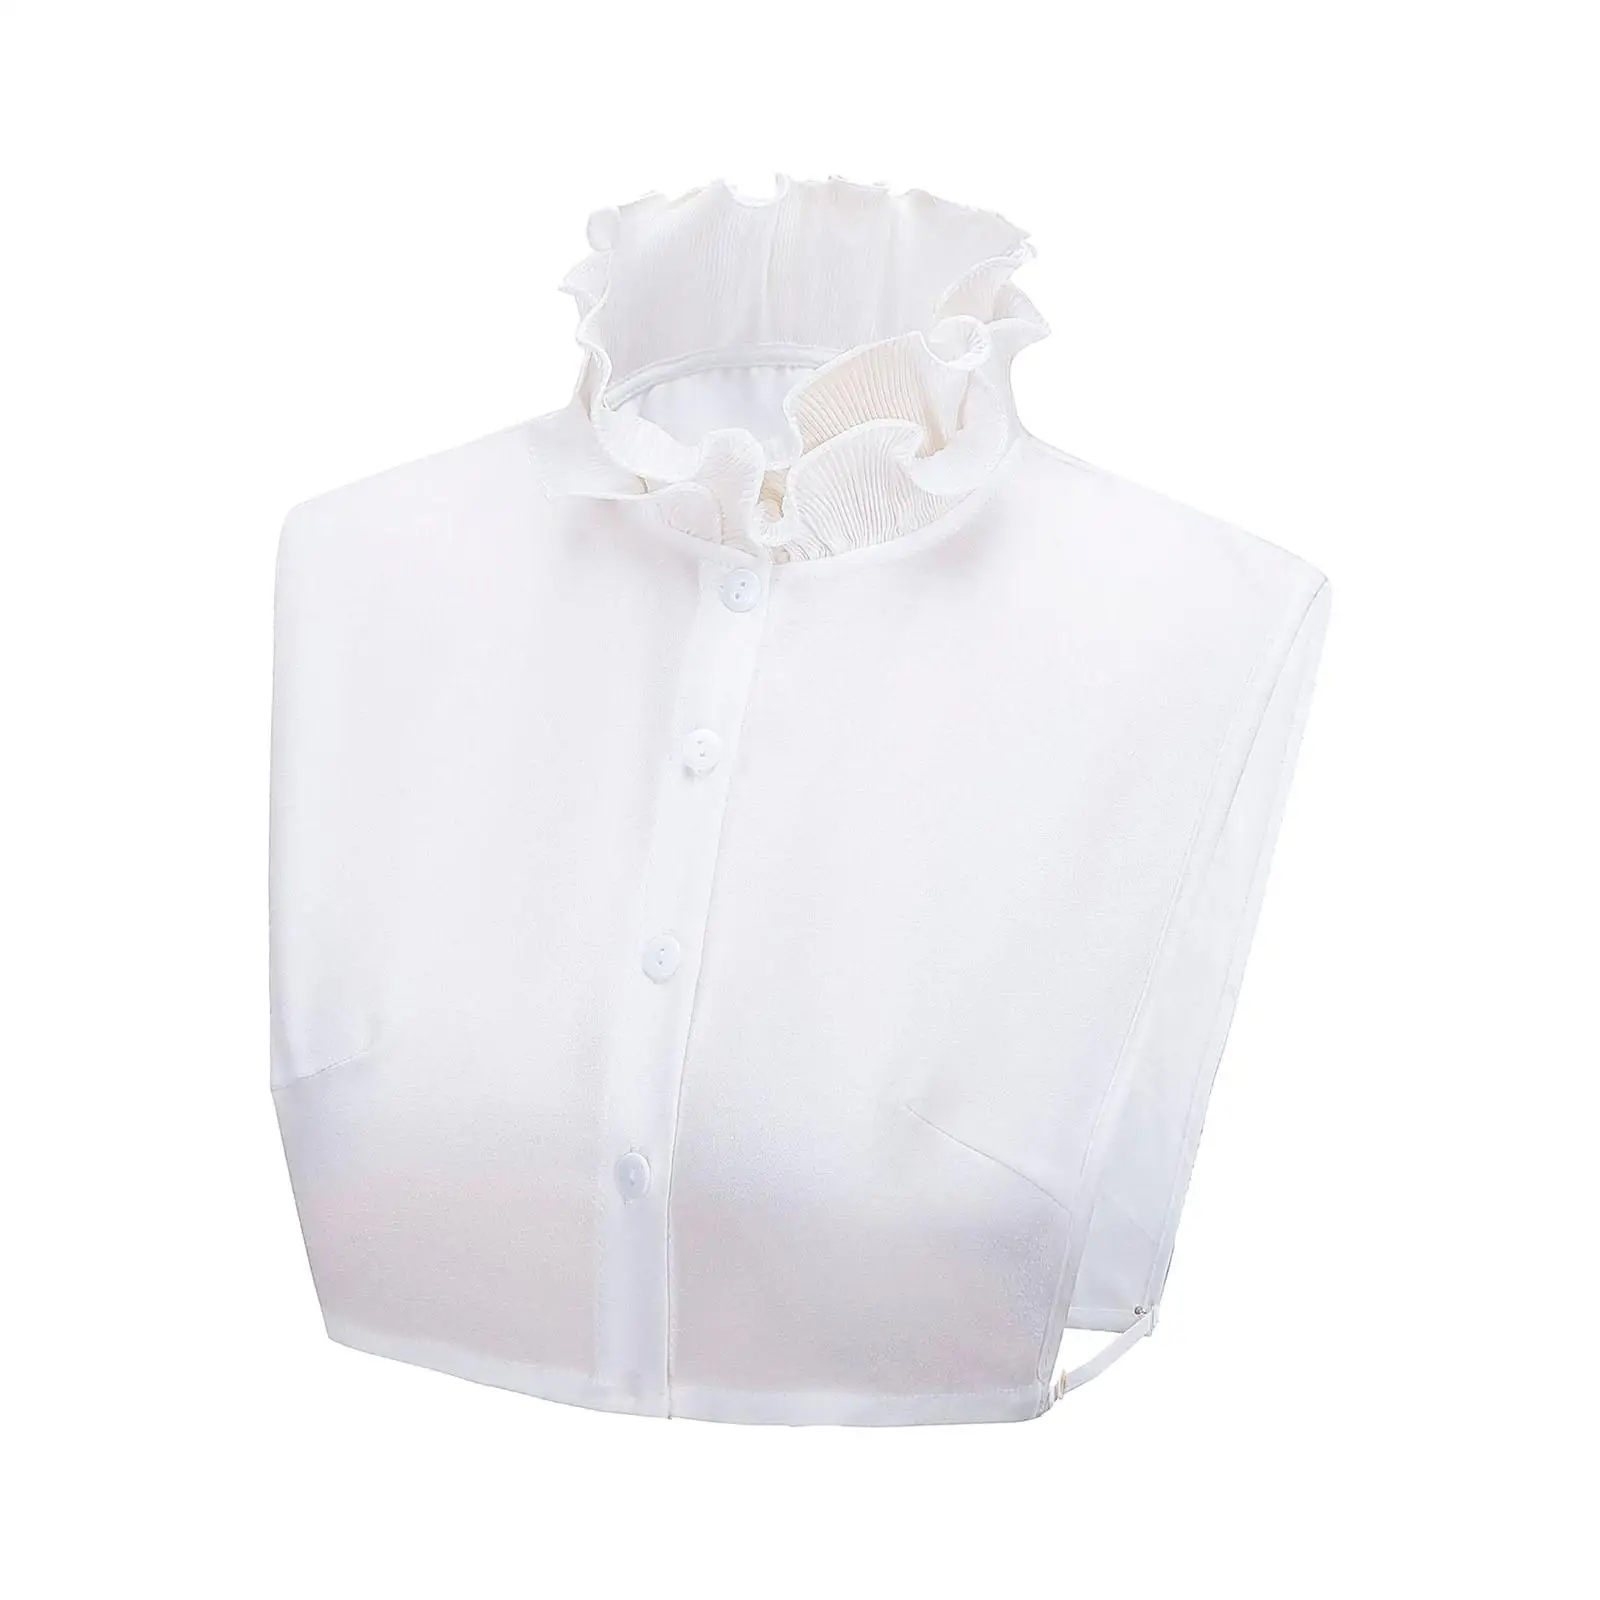 Detachable Neckwear Mock Neck Ruffles Upright Neck Half Shirt Top Neckwear False Doll Neckwear for Dress Sweater Shirt Girls